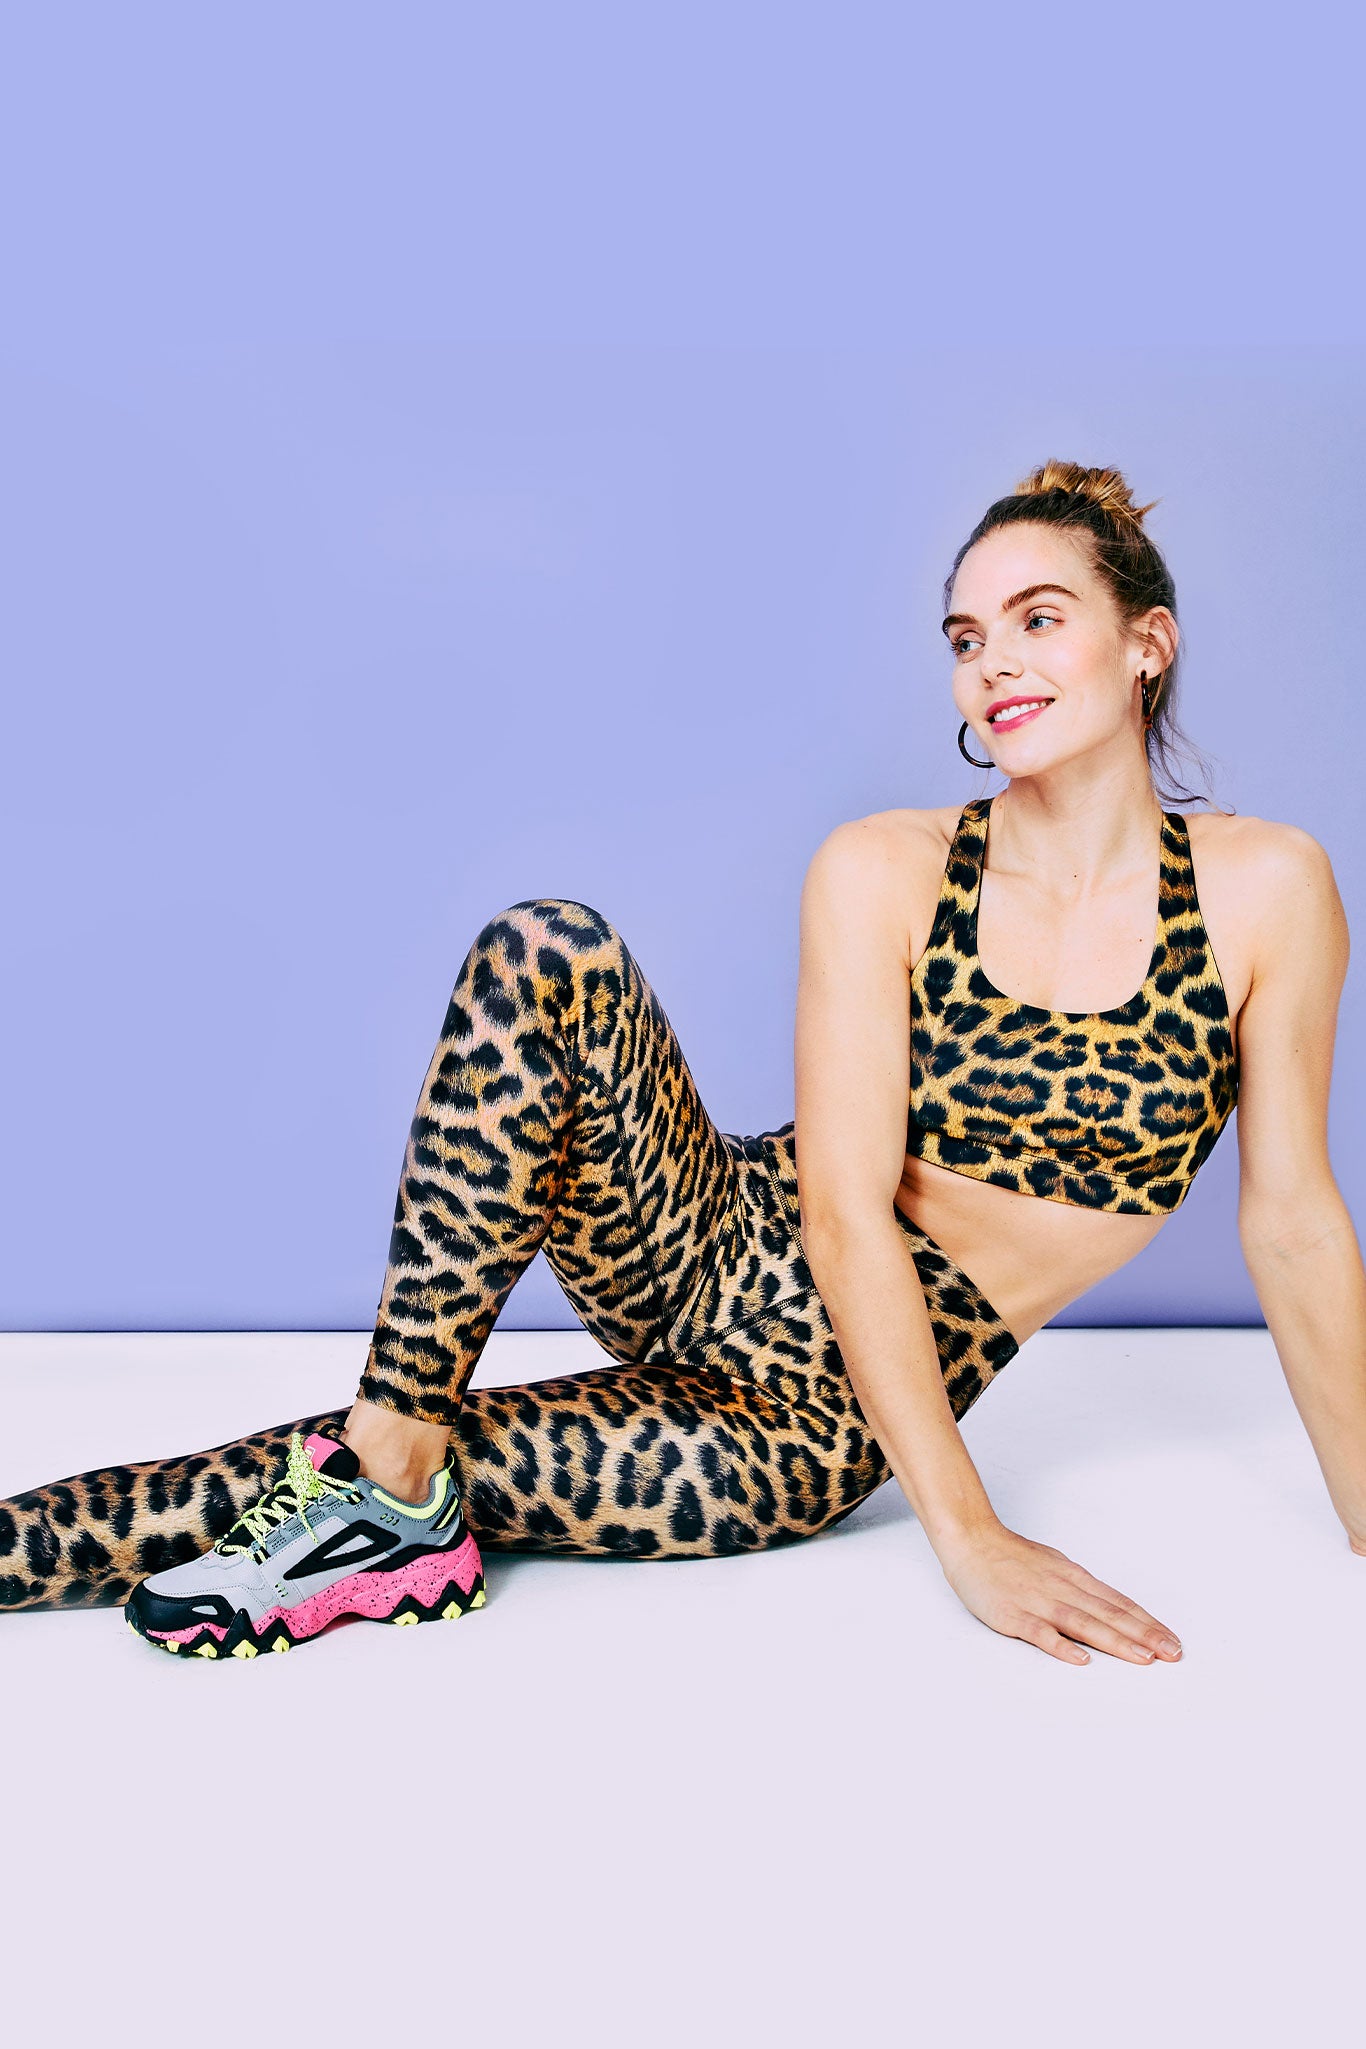 ADAGRO Ladies Tights Wide Waistband Leopard Print Leggings (Color